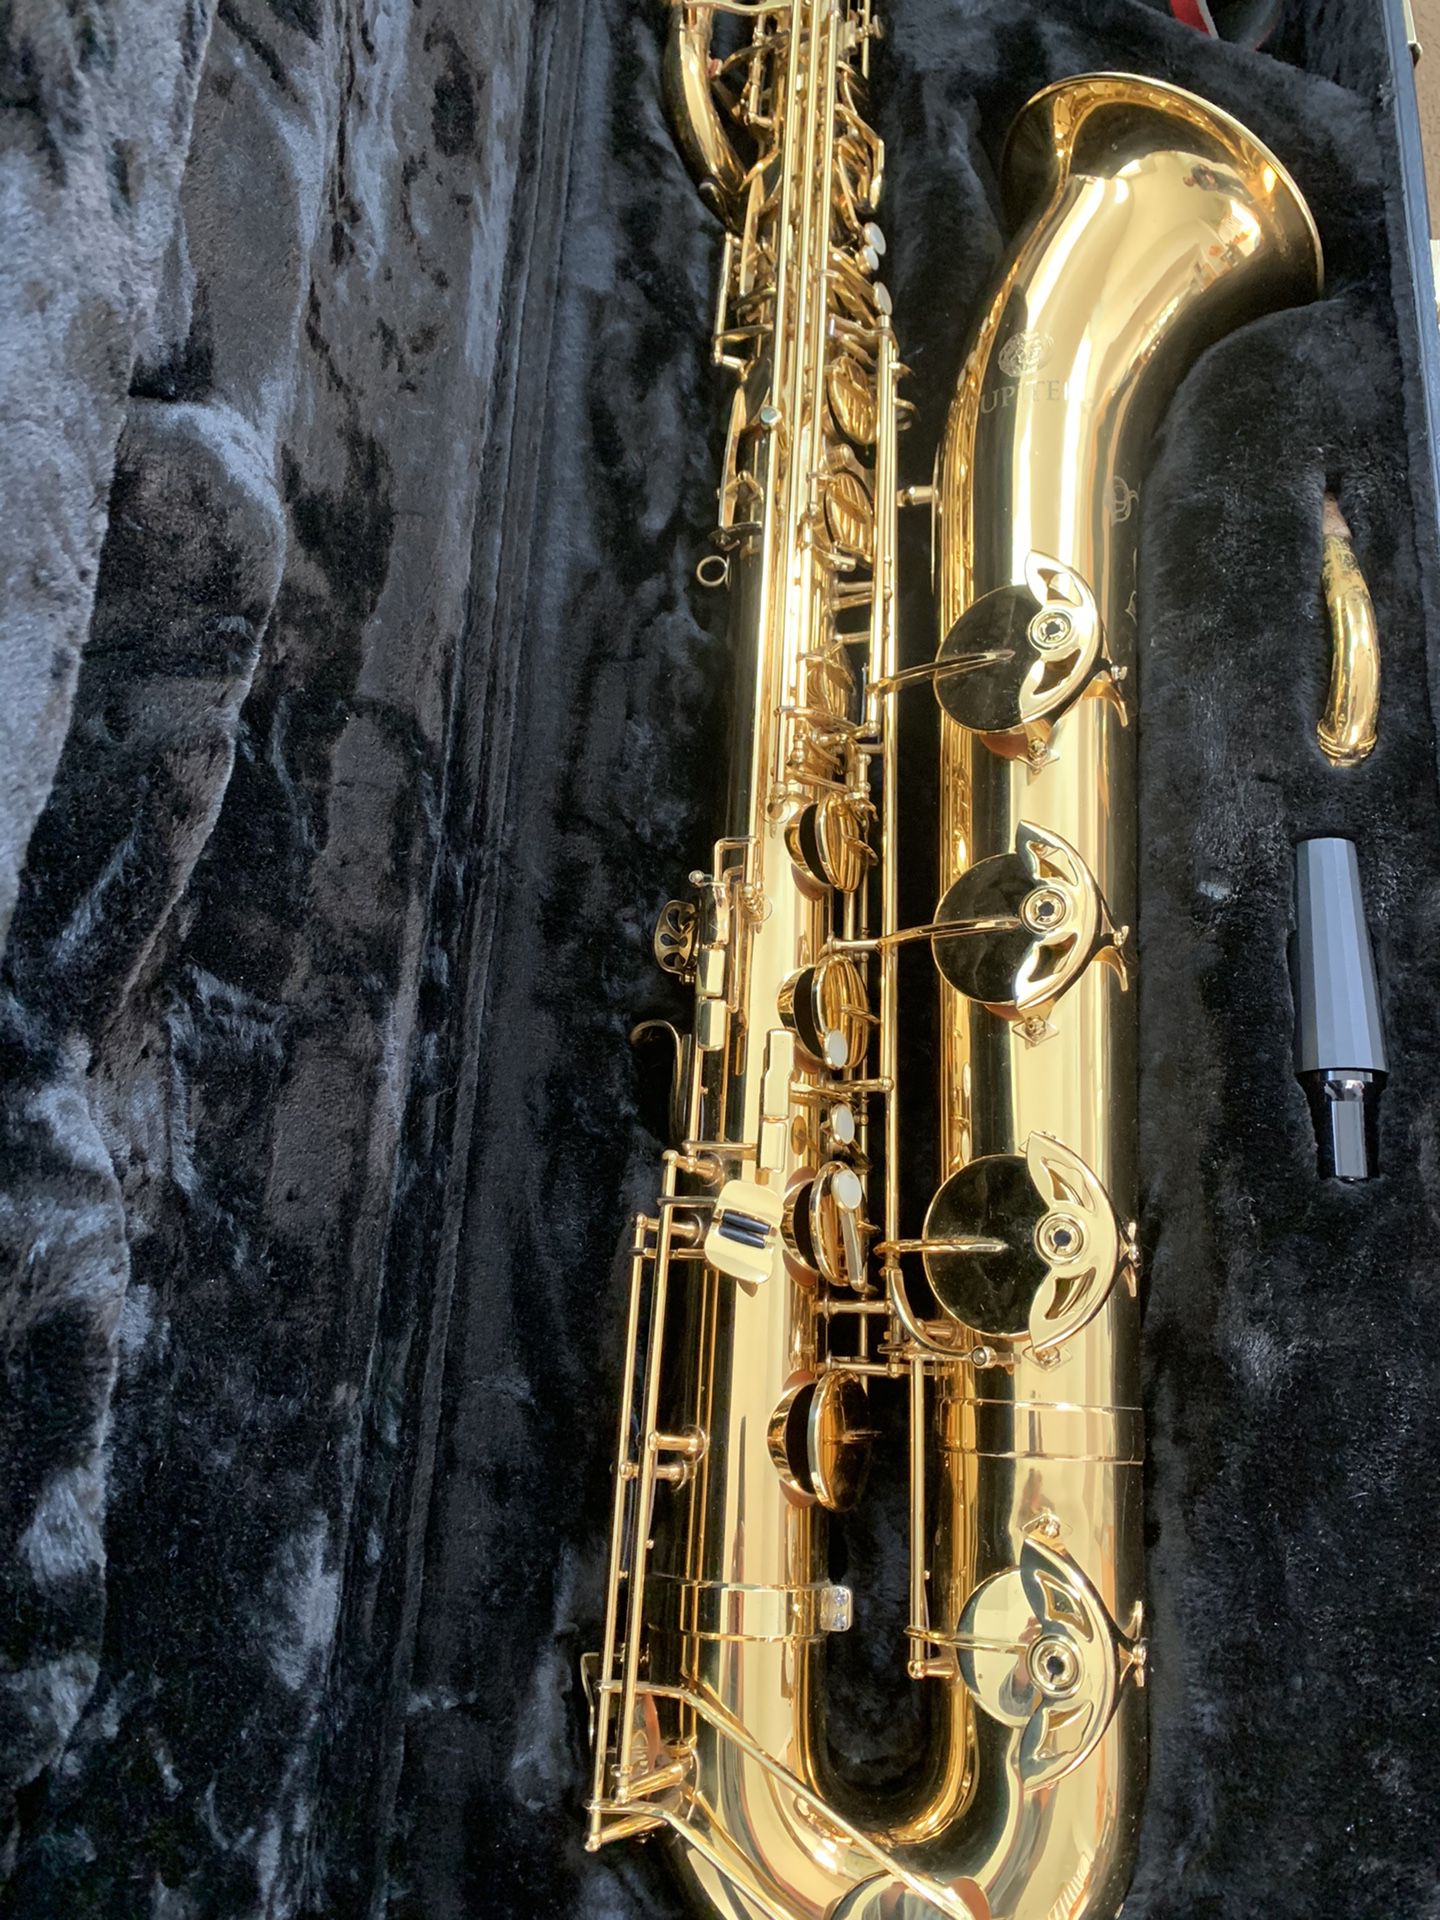 Jupiter JBS 1100 gold baritone saxophone